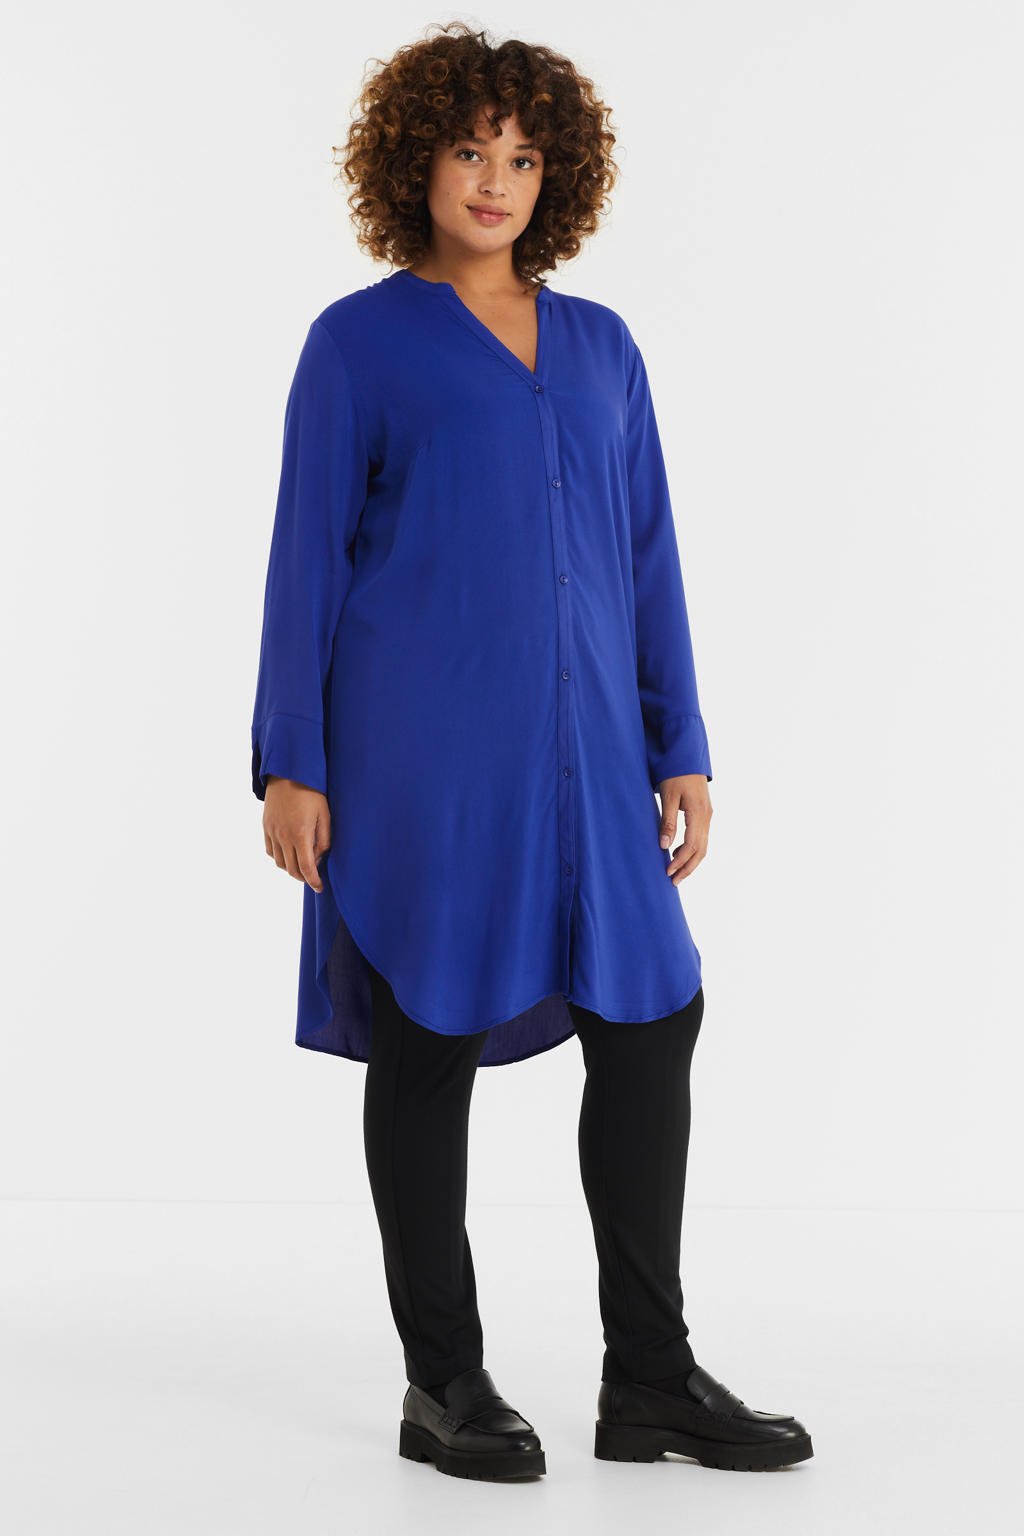 Blauwe dames GREAT LOOKS Lange blouse van viscose met lange mouwen, V-hals en knoopsluiting